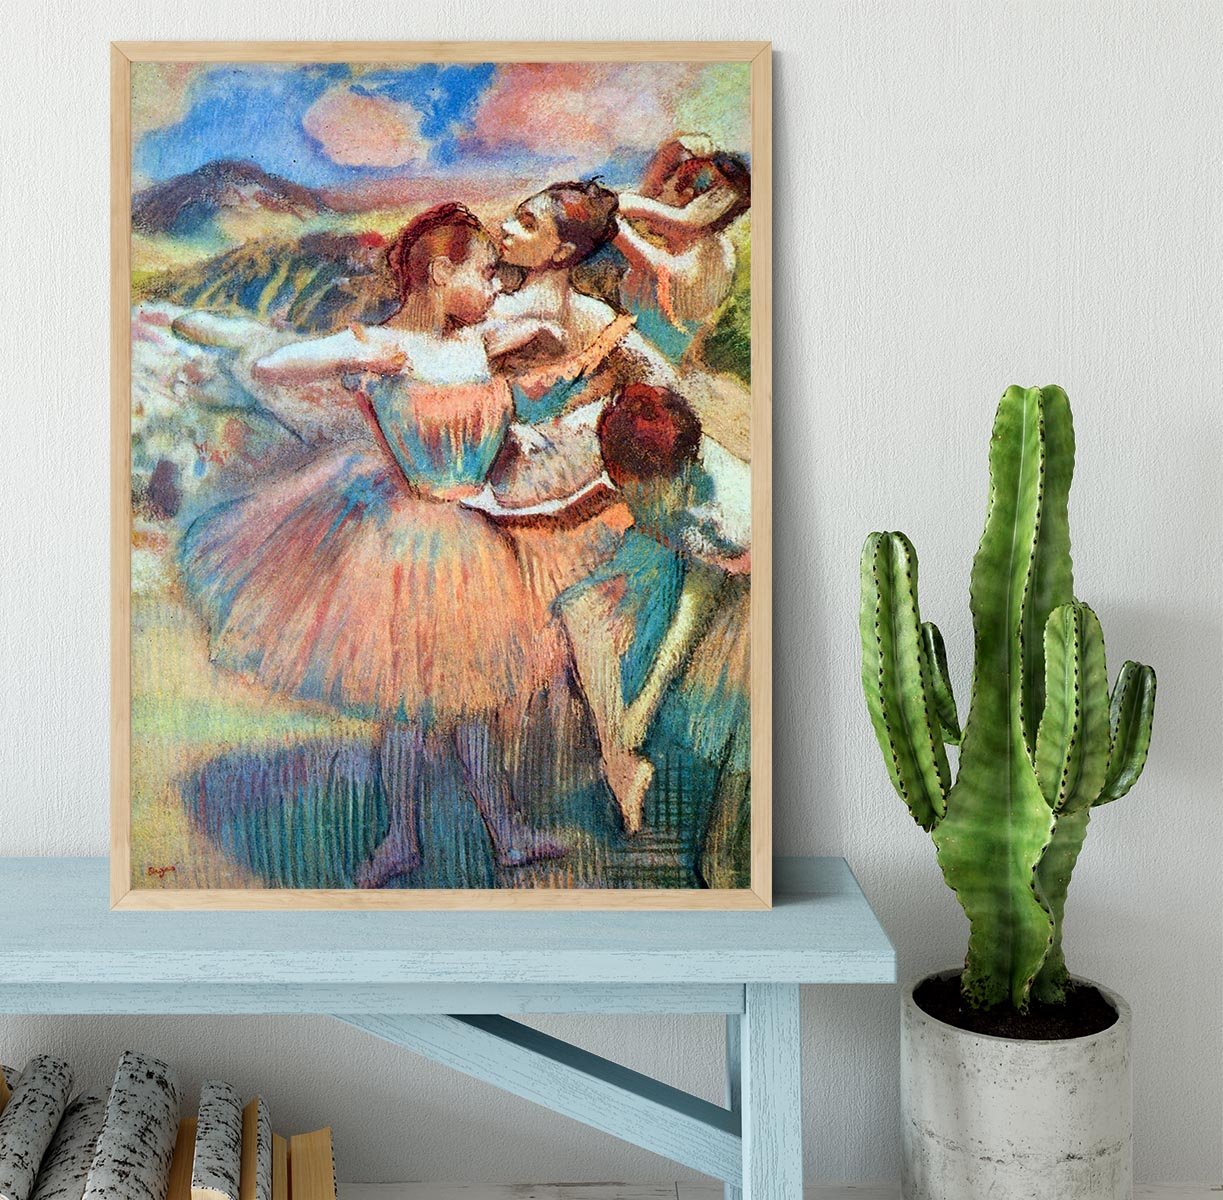 Dancers in the landscape by Degas Framed Print - Canvas Art Rocks - 4